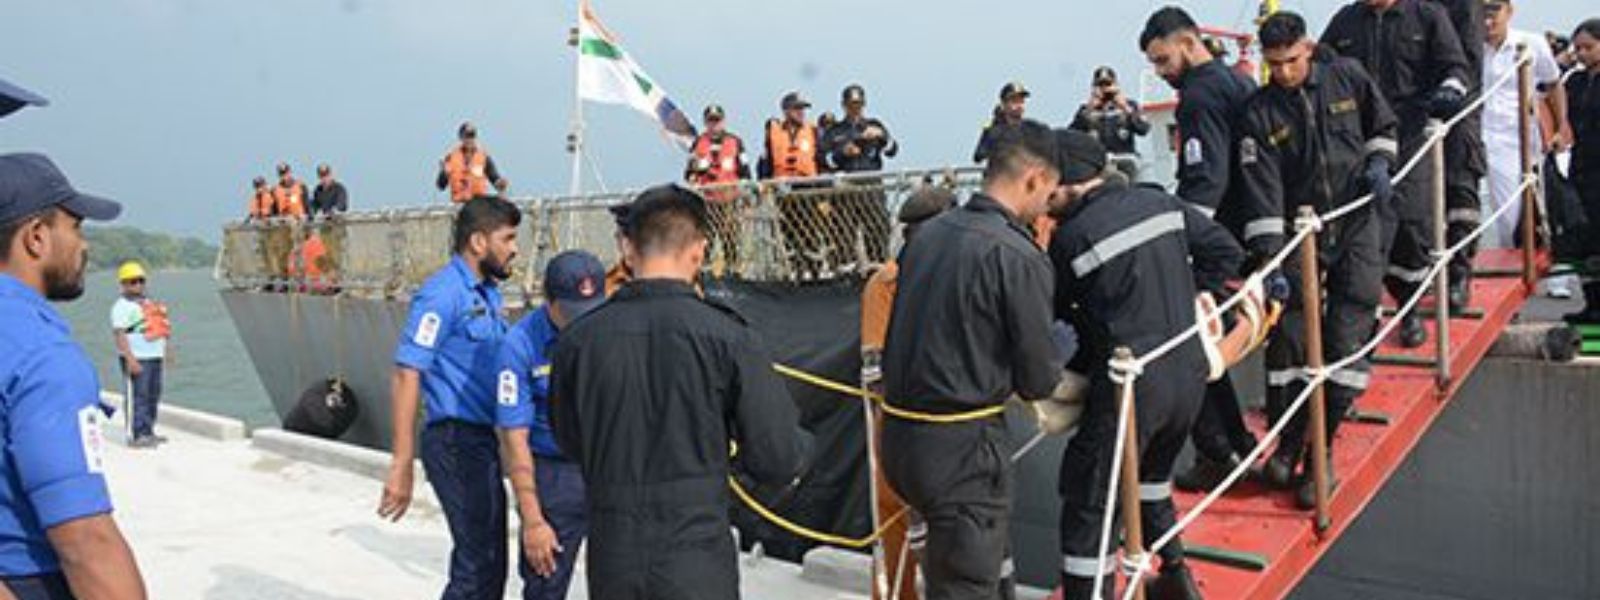 Sri Lanka Navy aids ailing Indian Navy sailor